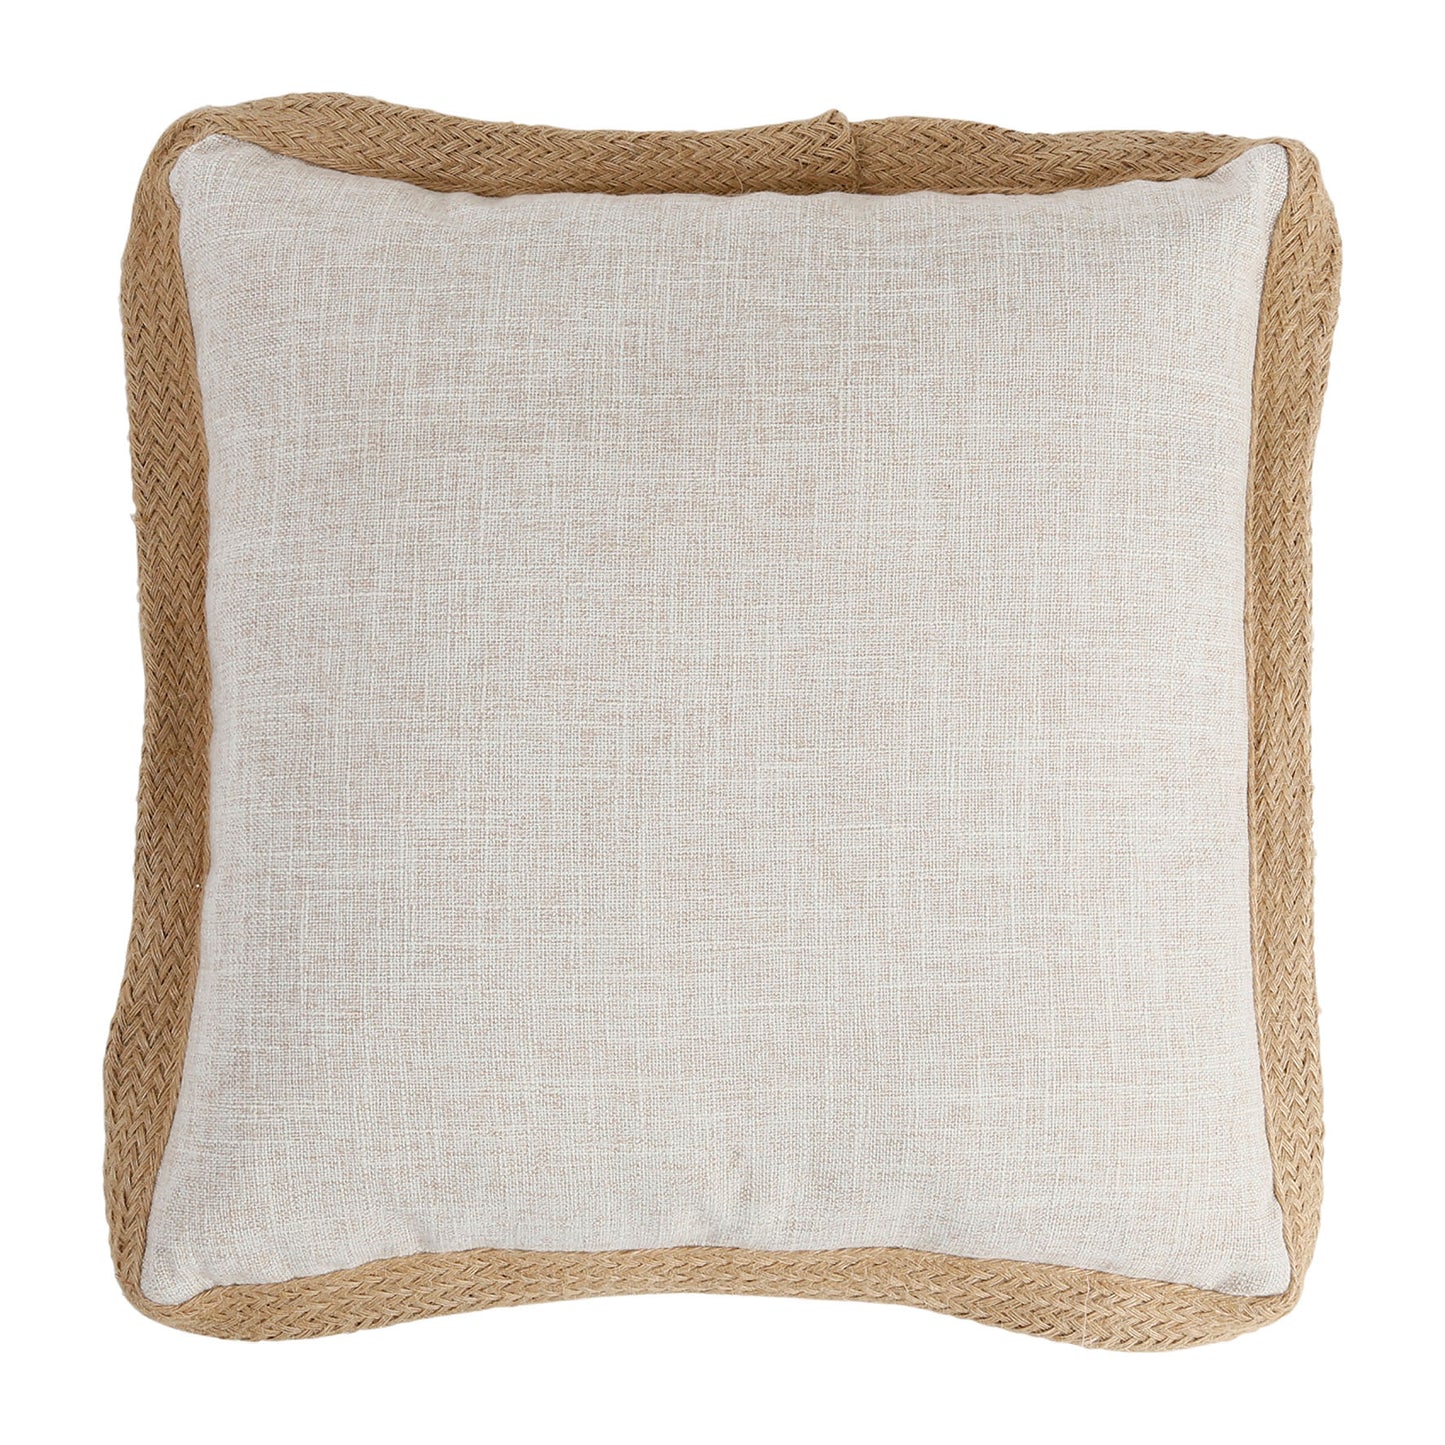 Jute bordered cushion, 45x45cm